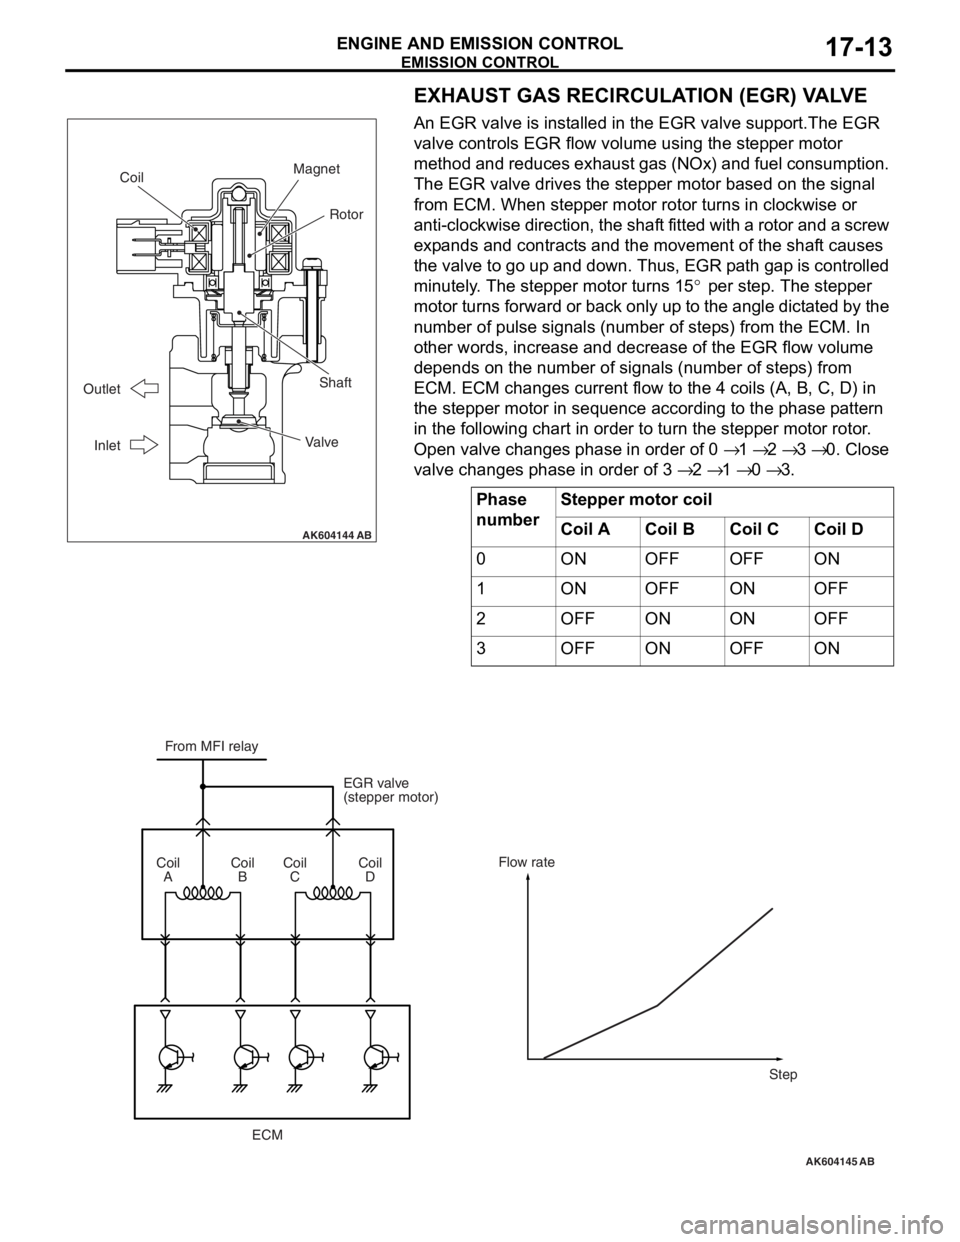 MITSUBISHI LANCER EVOLUTION X 2008  Workshop Manual EMISSION CONTROL
ENGINE AND EMISSION CONTROL17-13
EXHAUST GAS RECIRCULATION (EGR) VALVE
An EGR valve is installed in the EGR valve support.The EGR 
valve controls EGR flow volume using the stepper mot